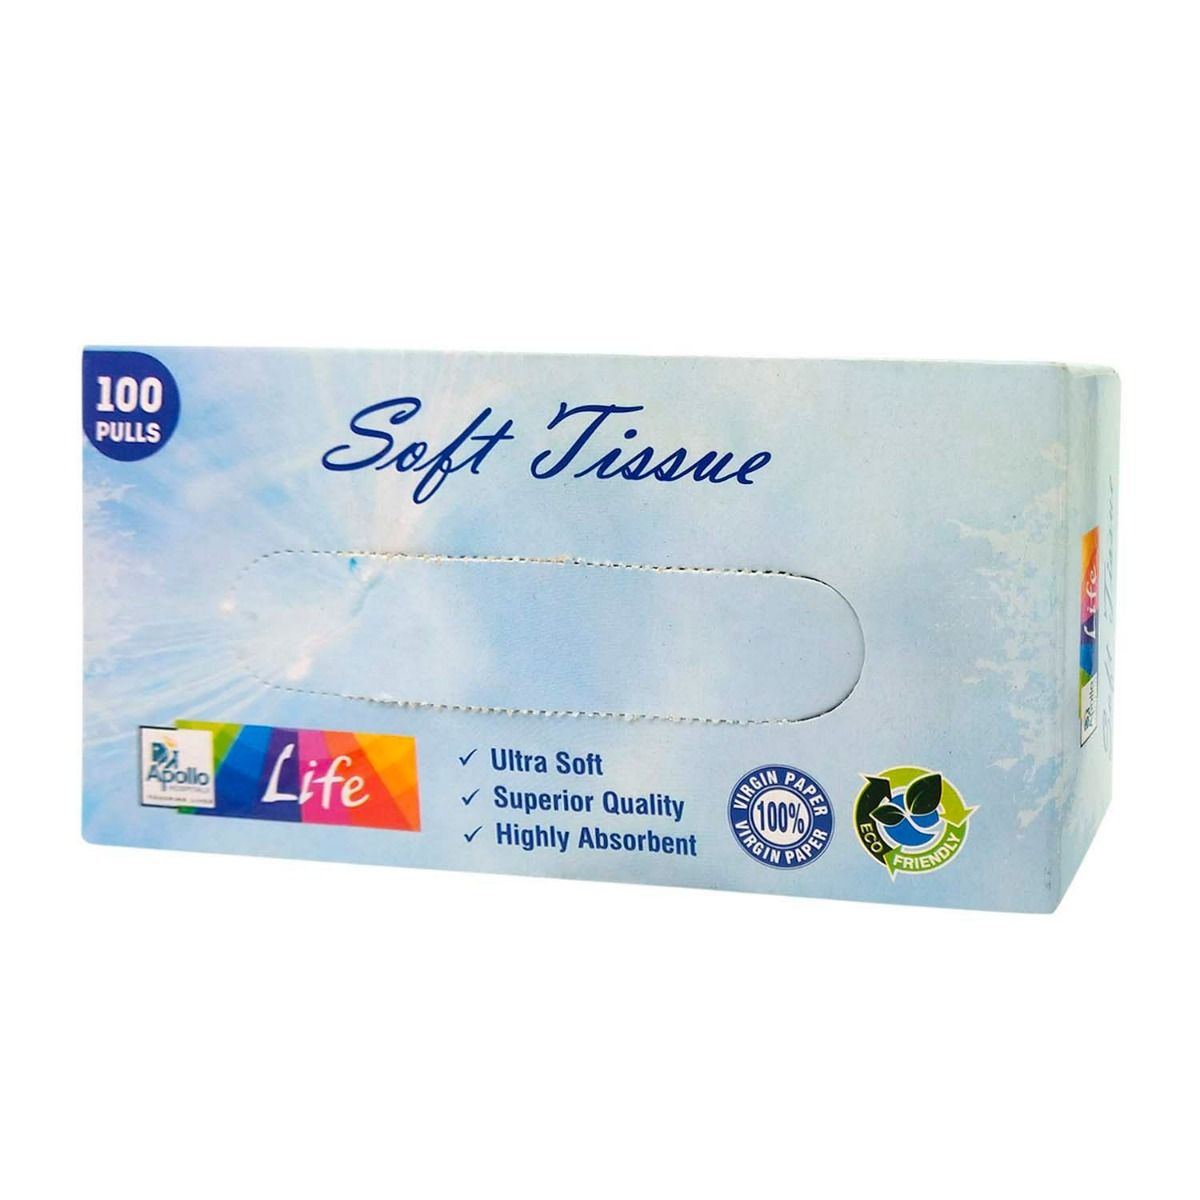 Buy Apollo Life Soft Tissue Pulls, 100 Count Online